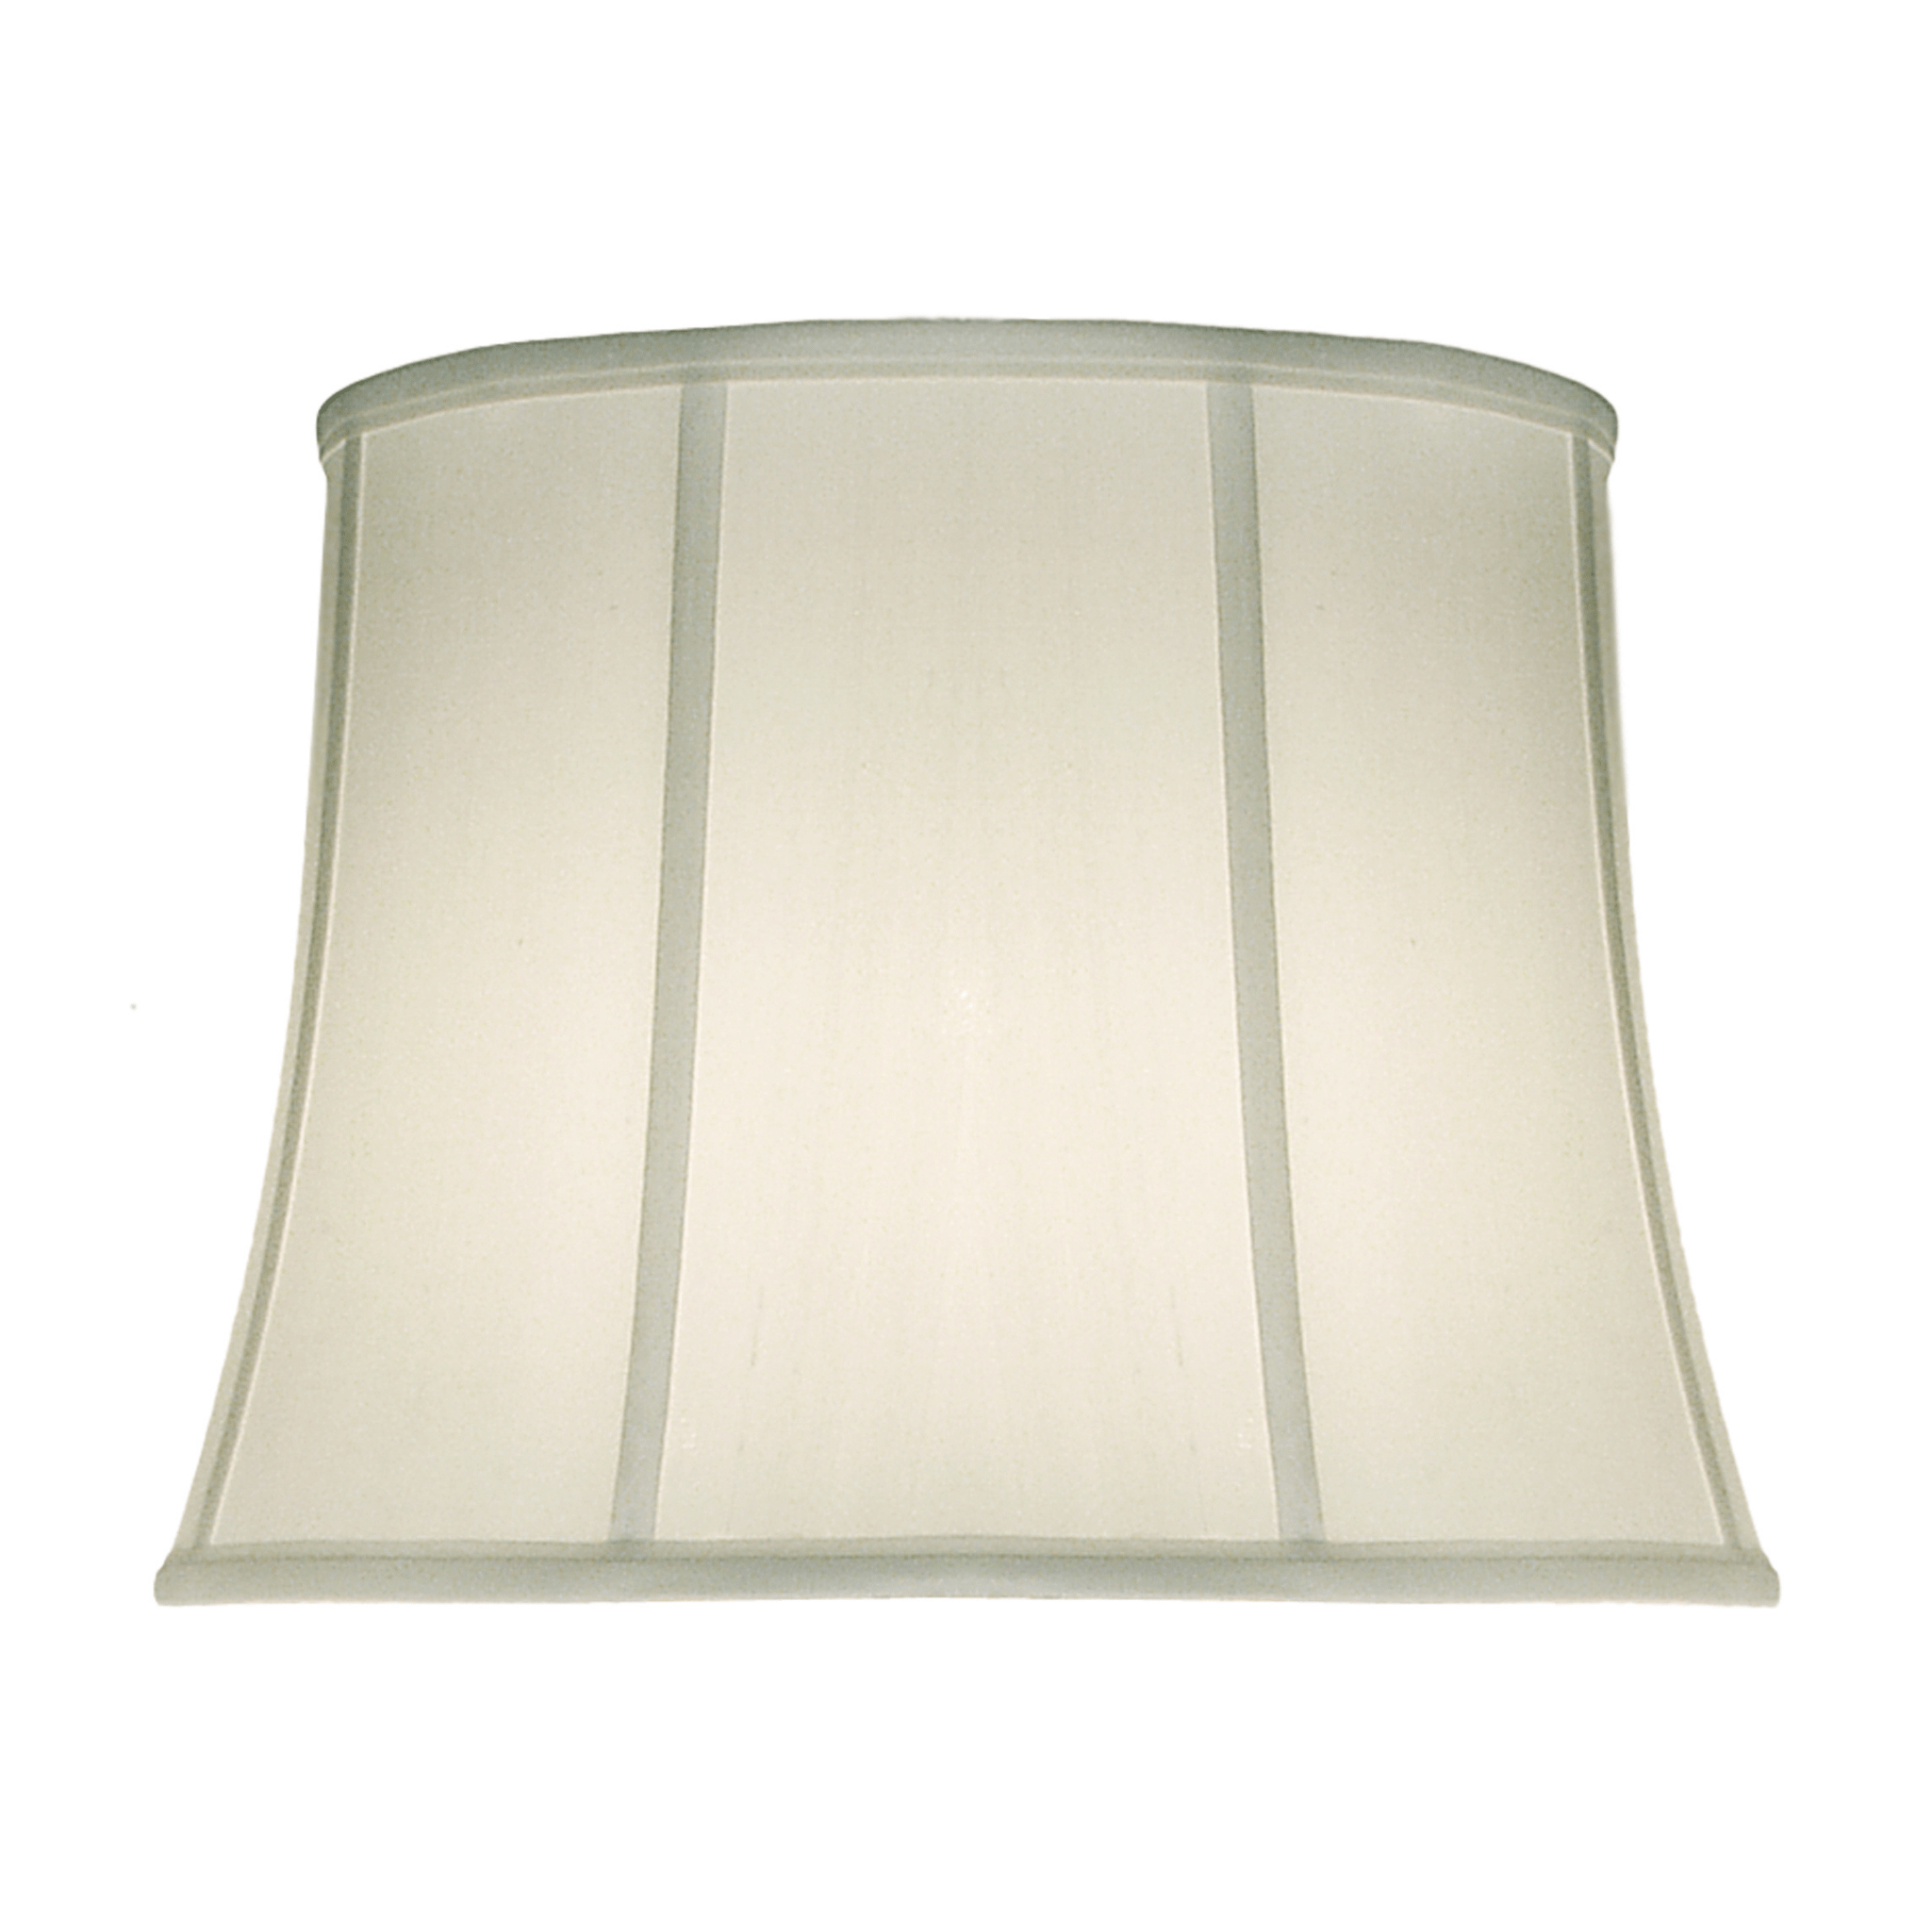 Stiffel lamp shade Off White Stiffel Off White Softback Modified Bell Silk Shantung Lamp shade - 14 x 18 x 13